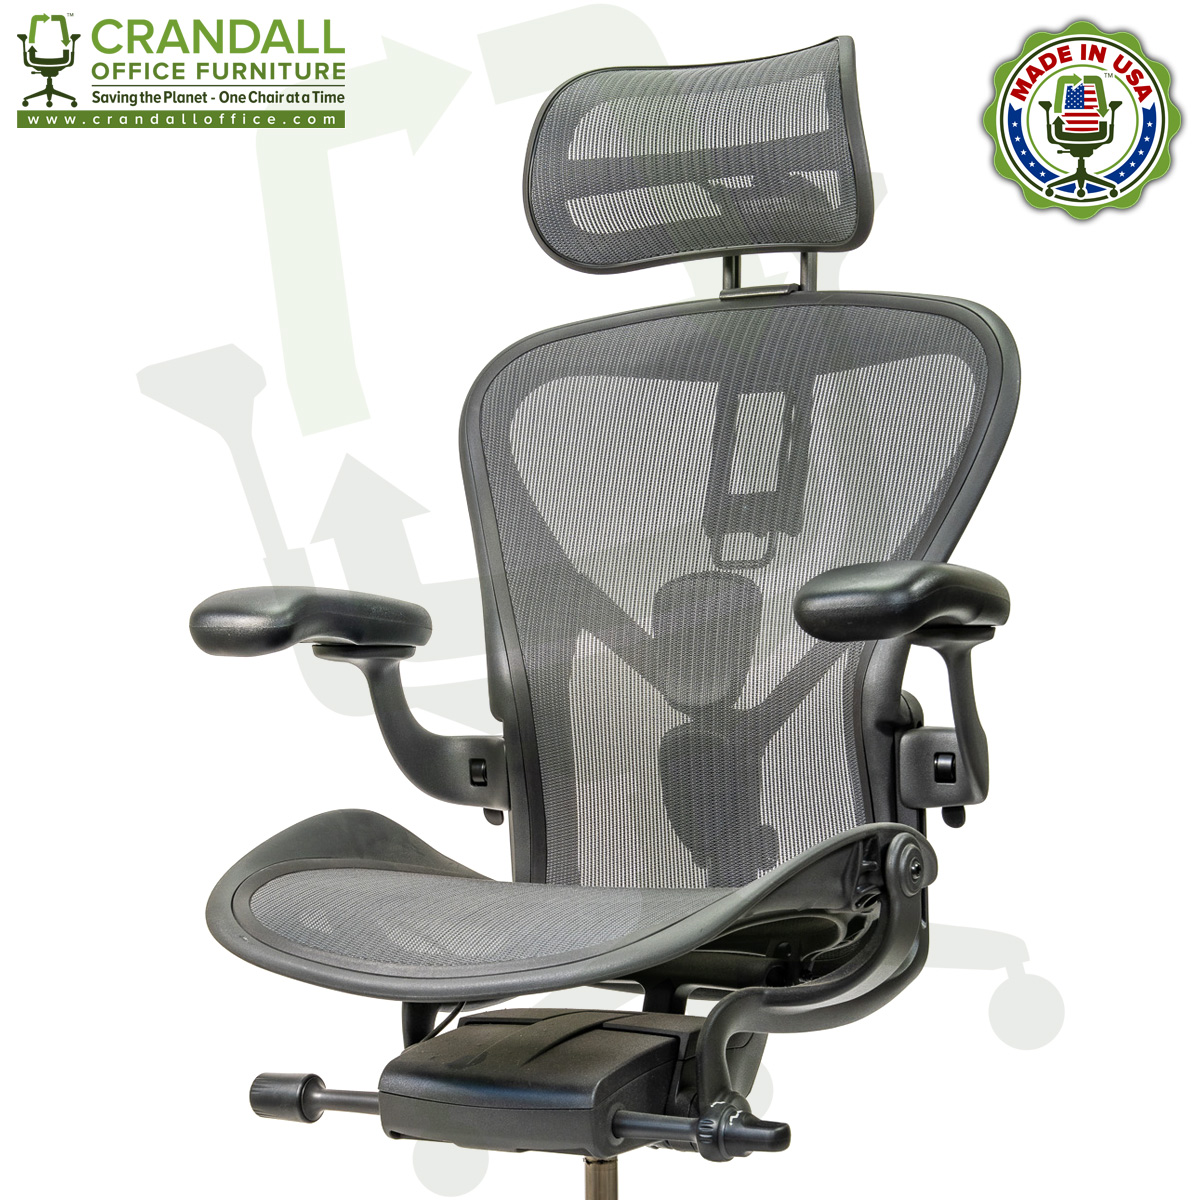 placere Genbruge Meander Atlas Suspension Headrest for Herman Miller Aeron Remastered Chair -  Crandall Office Furniture